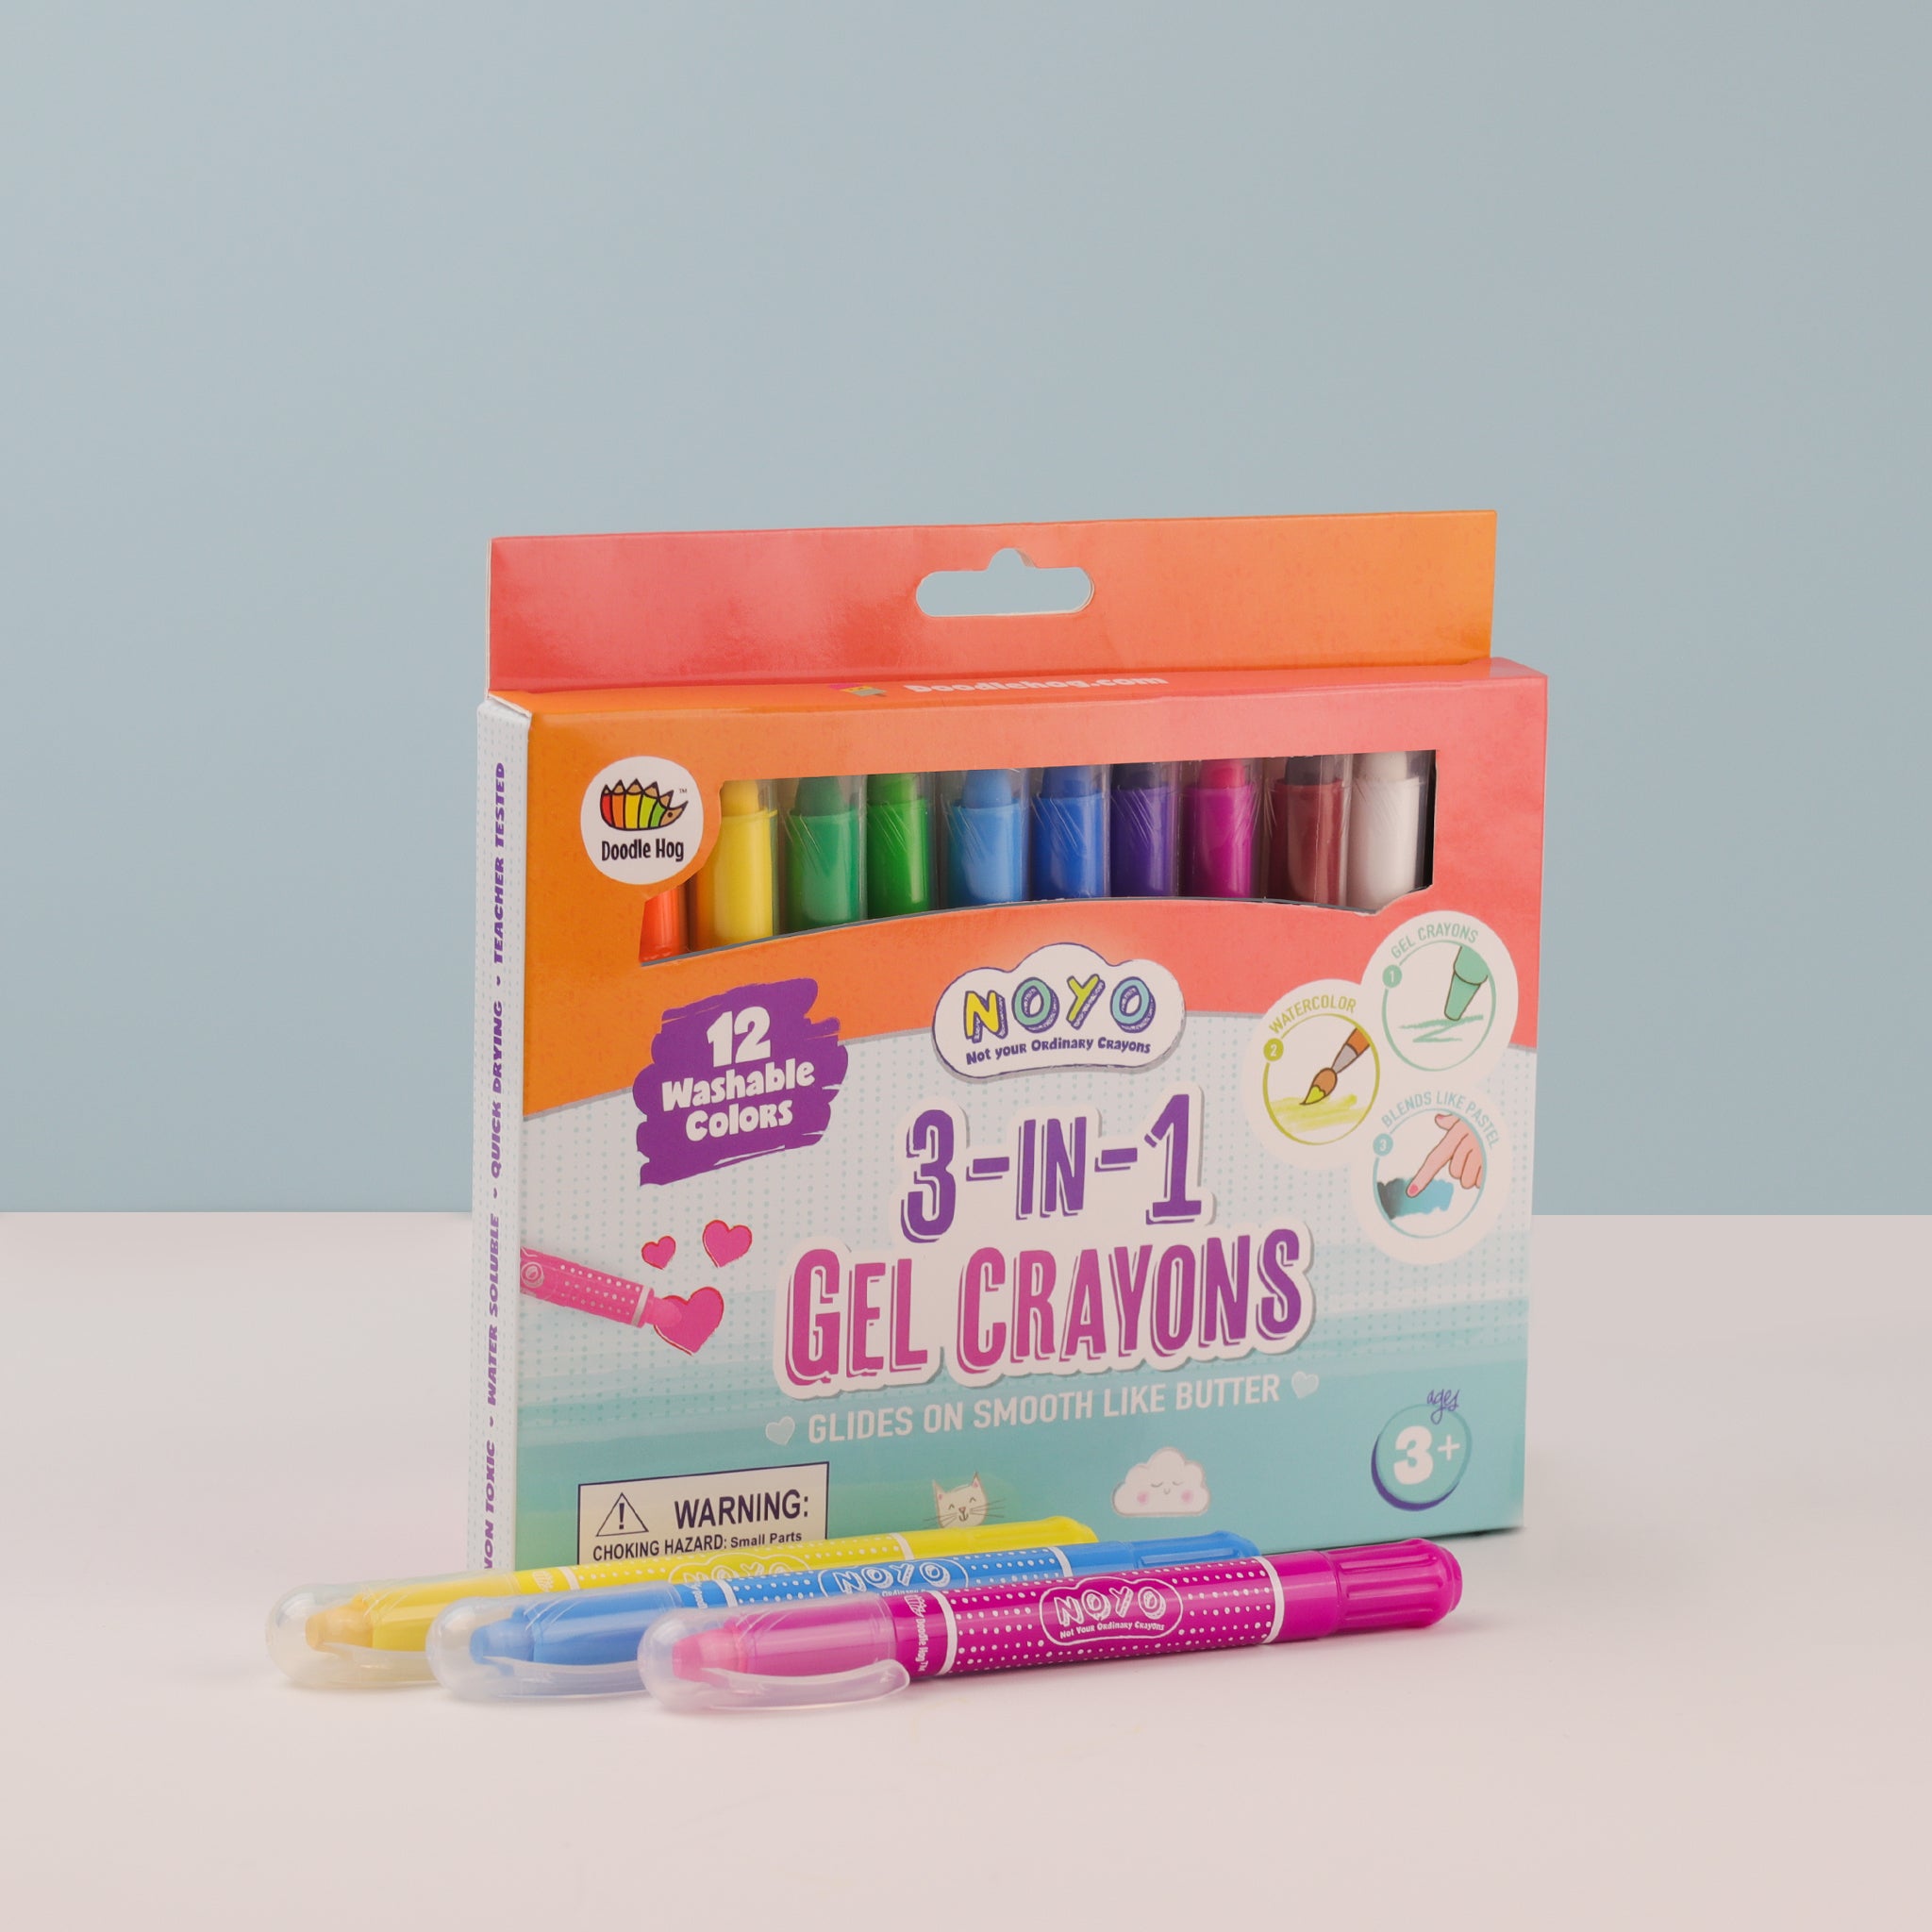 Crayola Dry Erase Crayons🖍 Quick Review #shorts #crayola